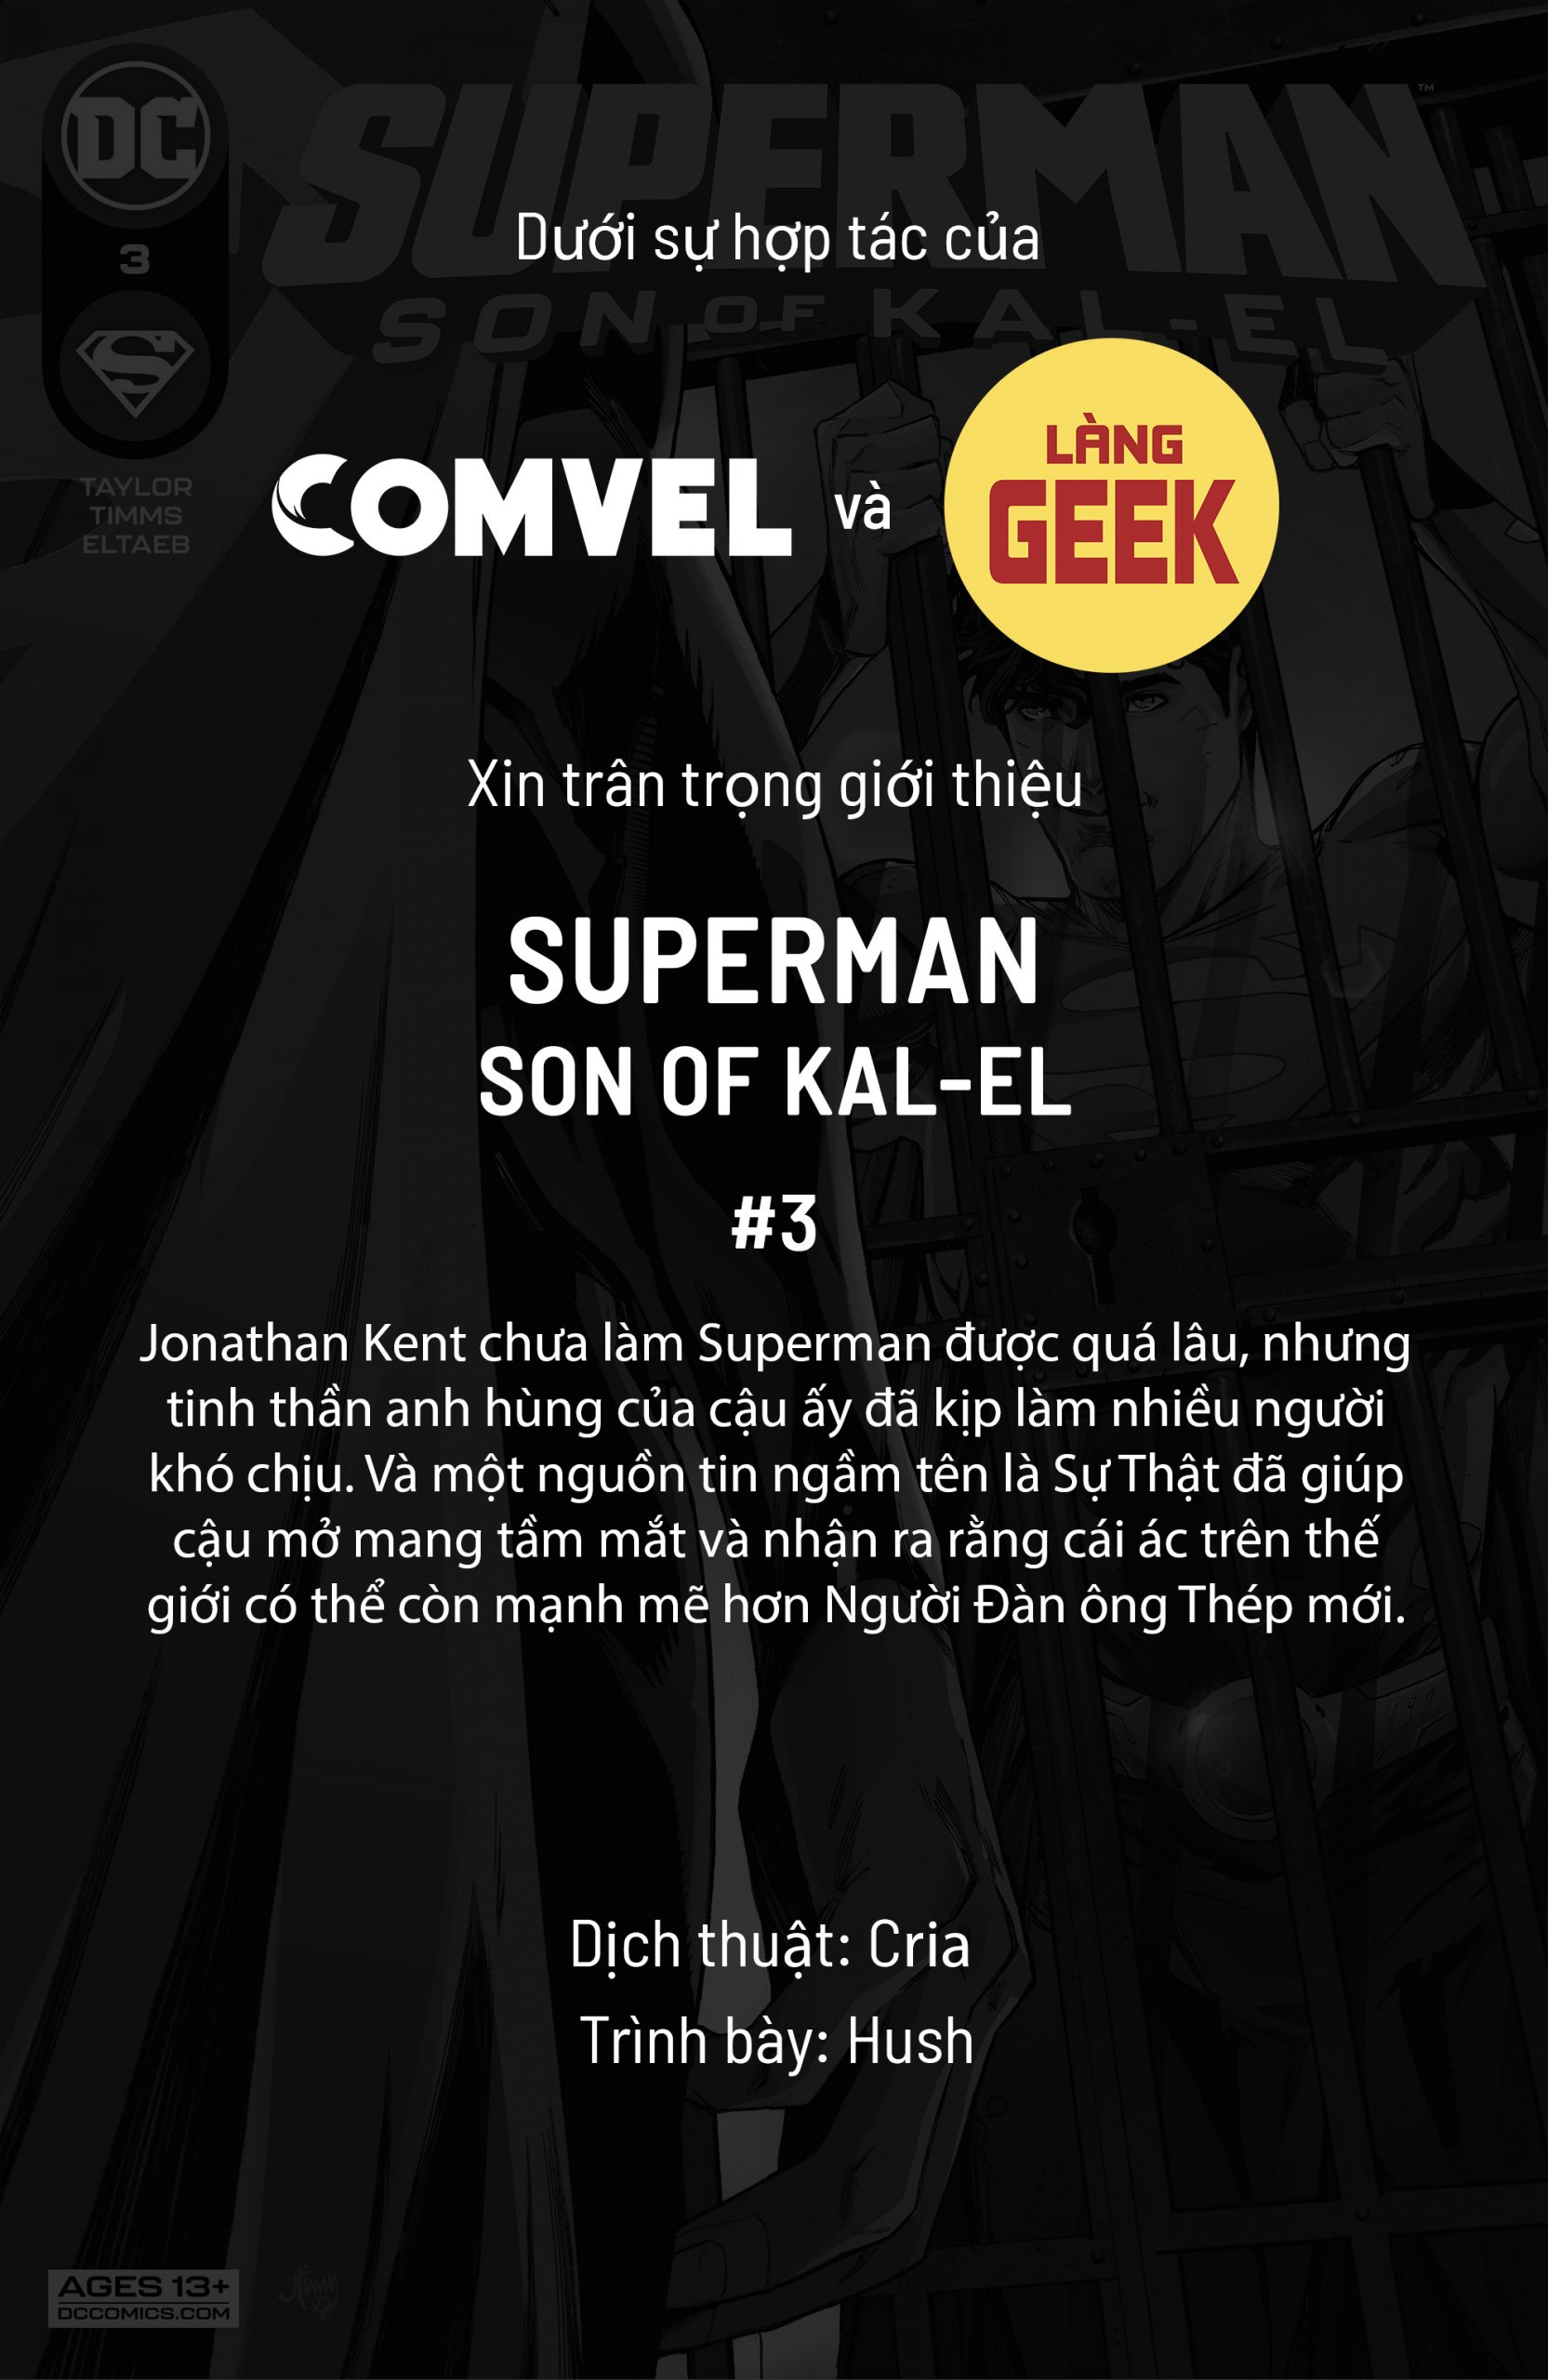 https://langgeek.net/wp-content/webpc-passthru.php?src=https://langgeek.net/wp-content/uploads/2021/12/Superman-Son-of-Kal-El-2021-003-00-scaled.jpg&nocache=1